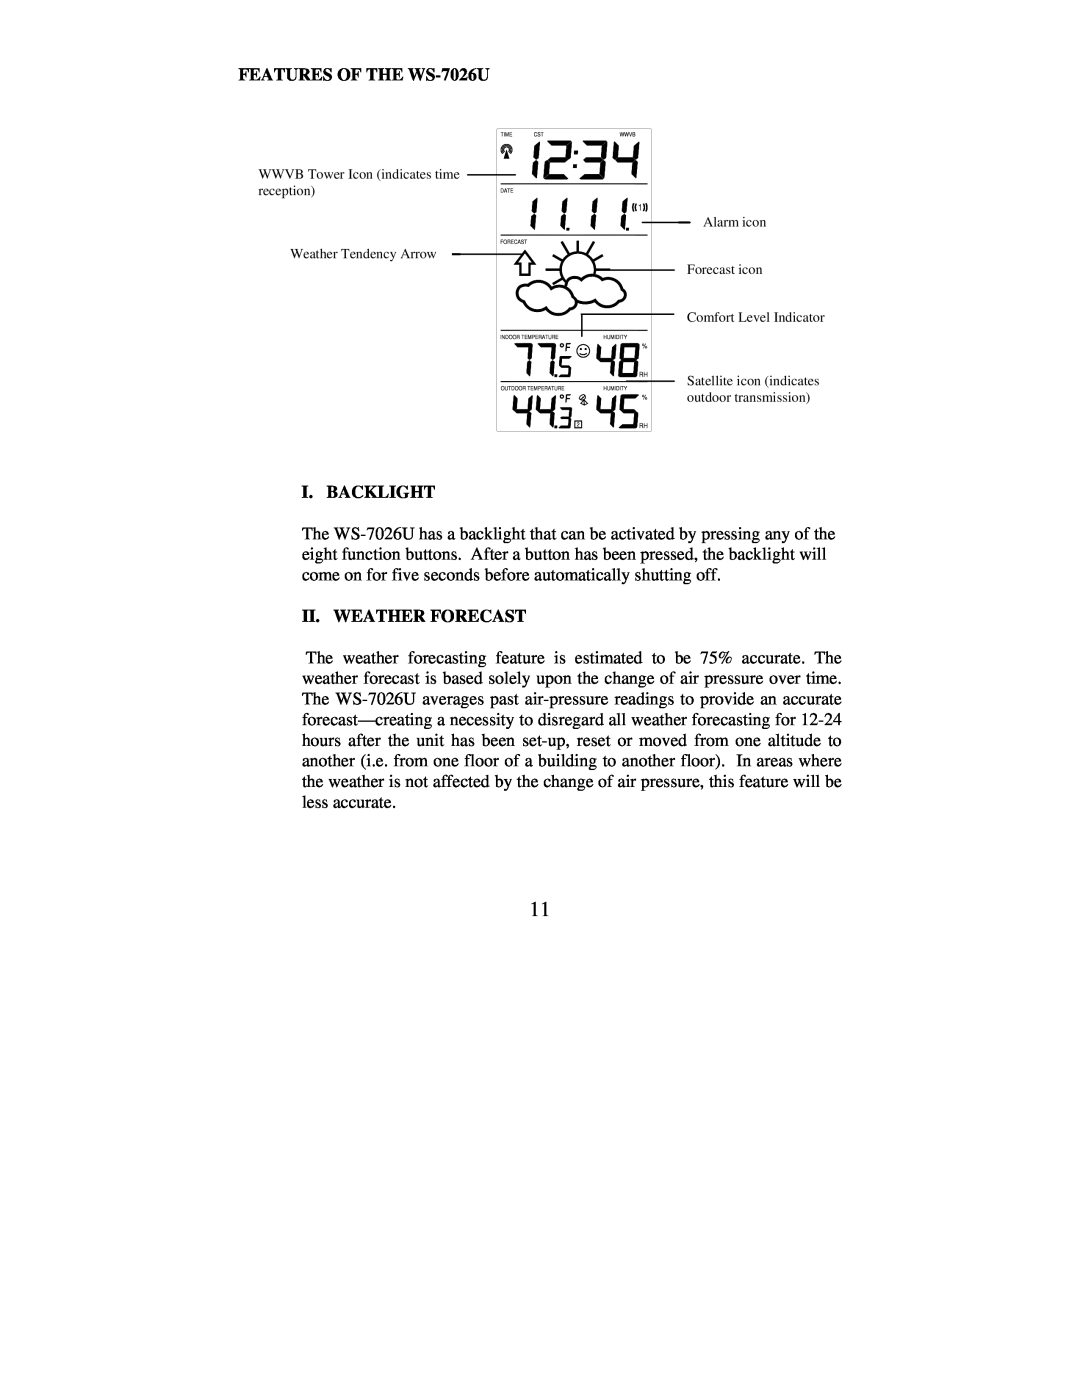 La Crosse Technology instruction manual FEATURES OF THE WS-7026U, I. Backlight, Ii. Weather Forecast 